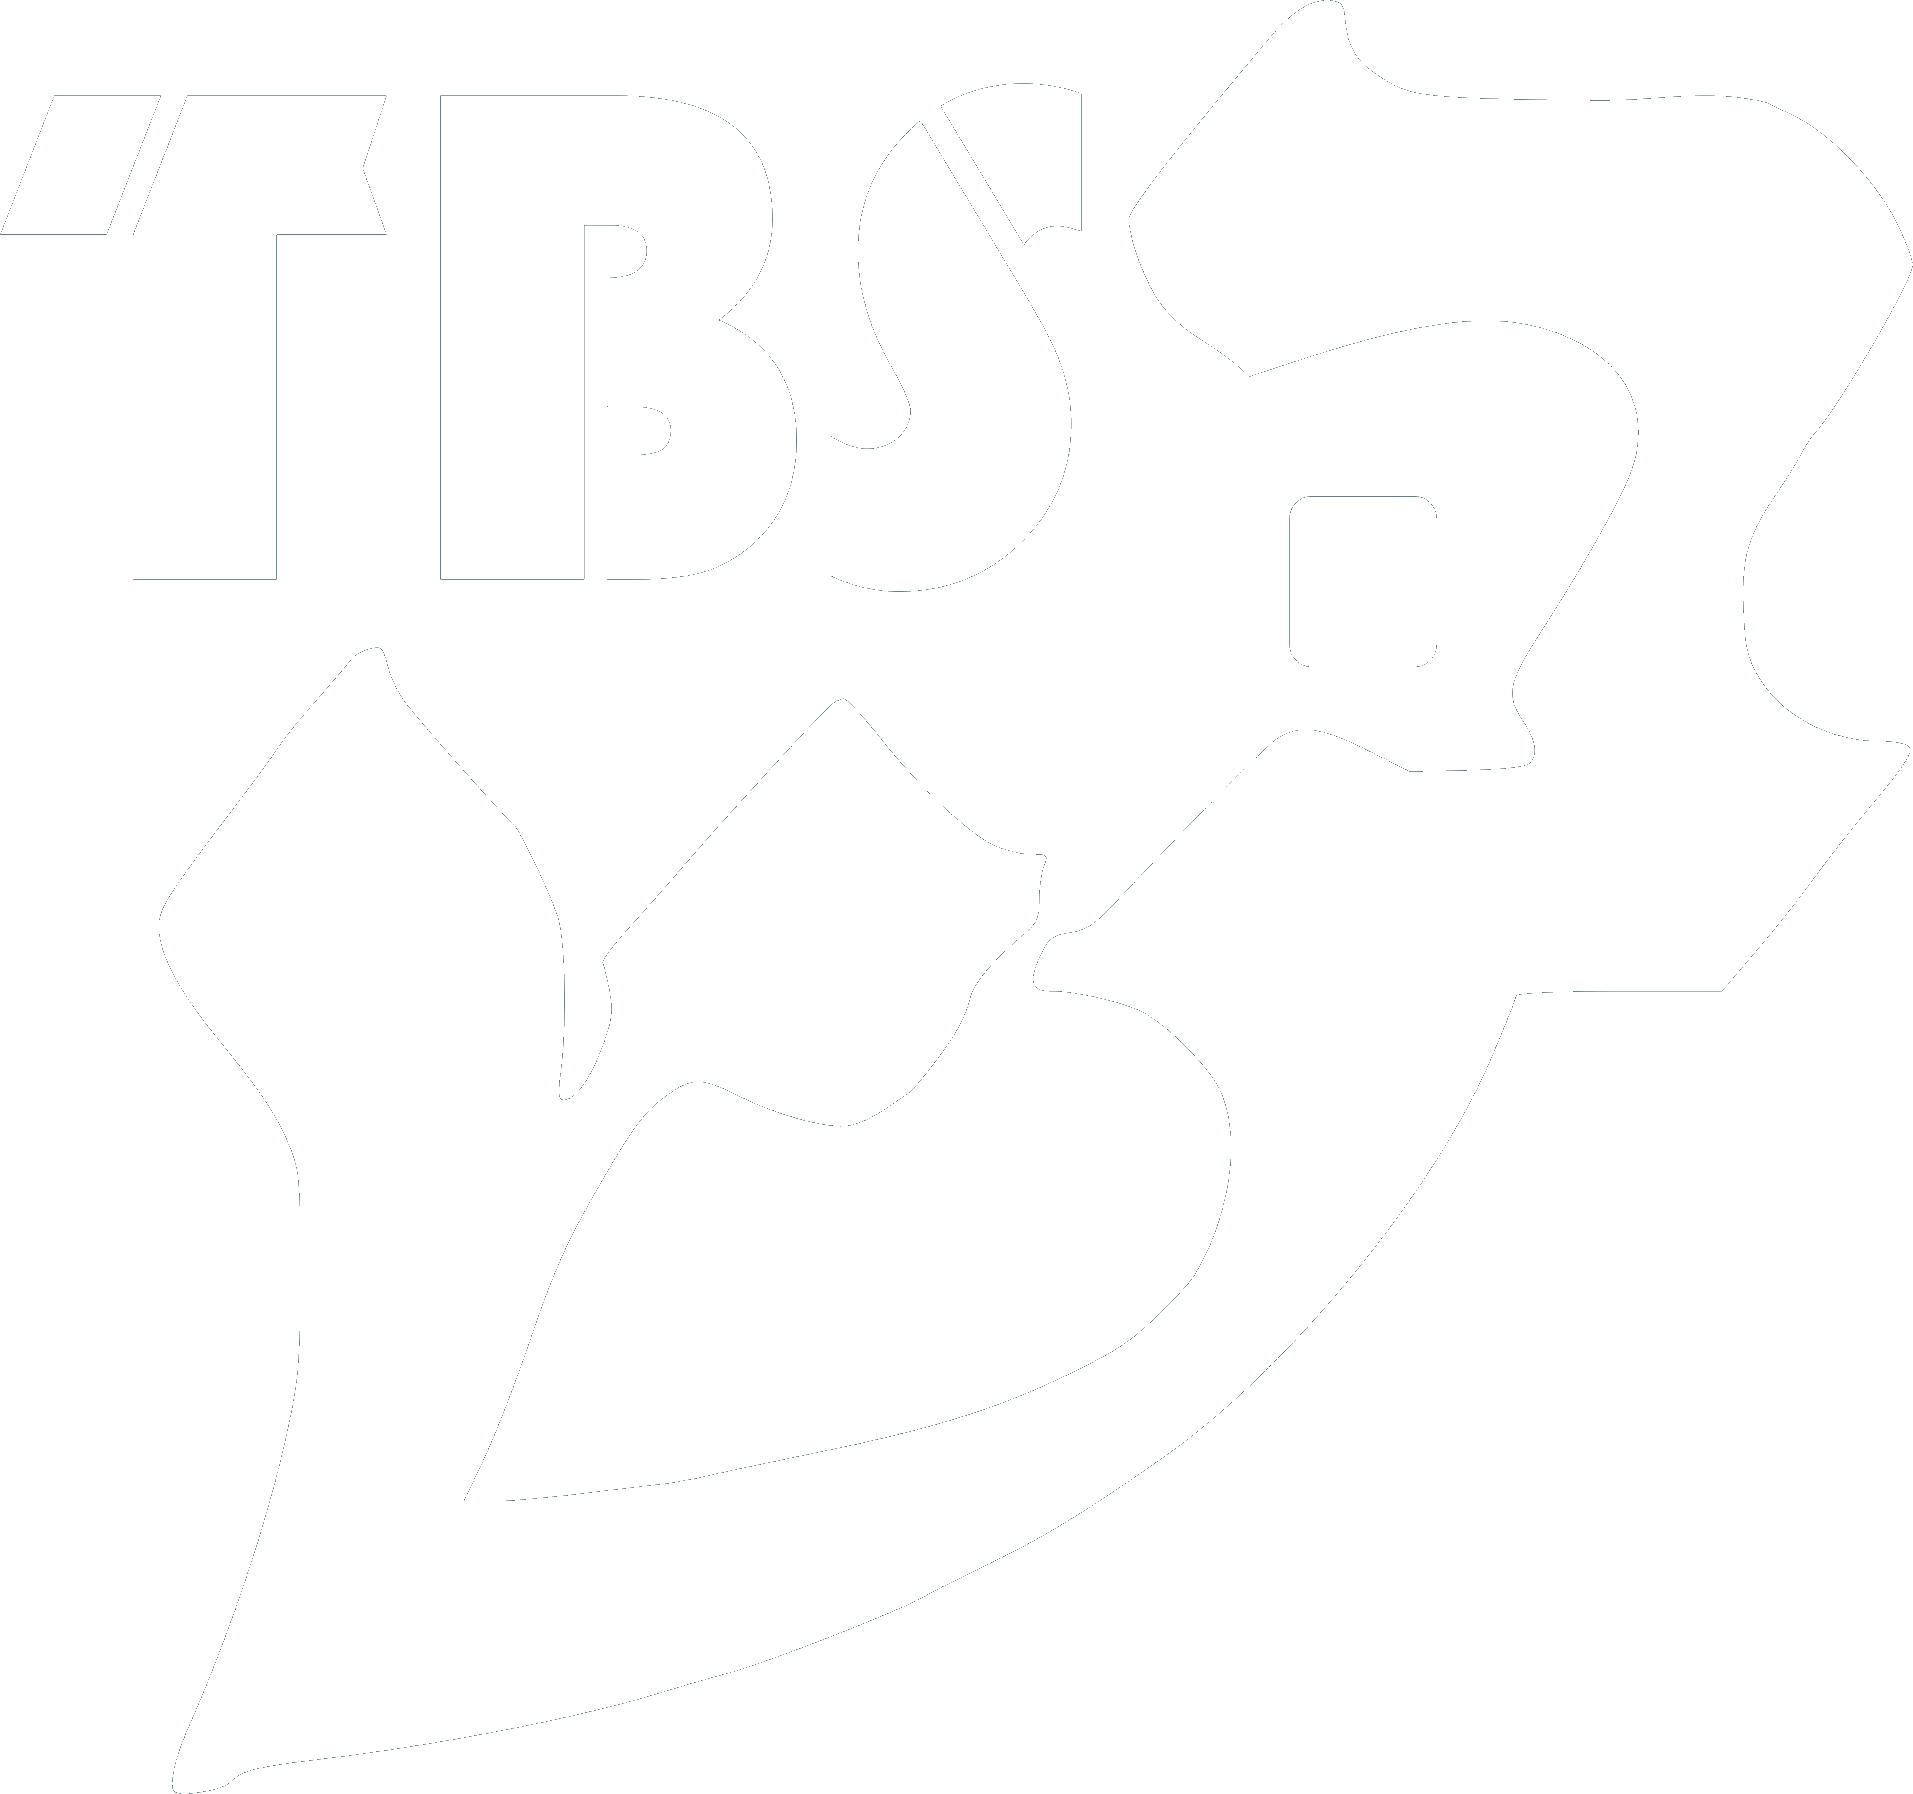 TBS logo in white